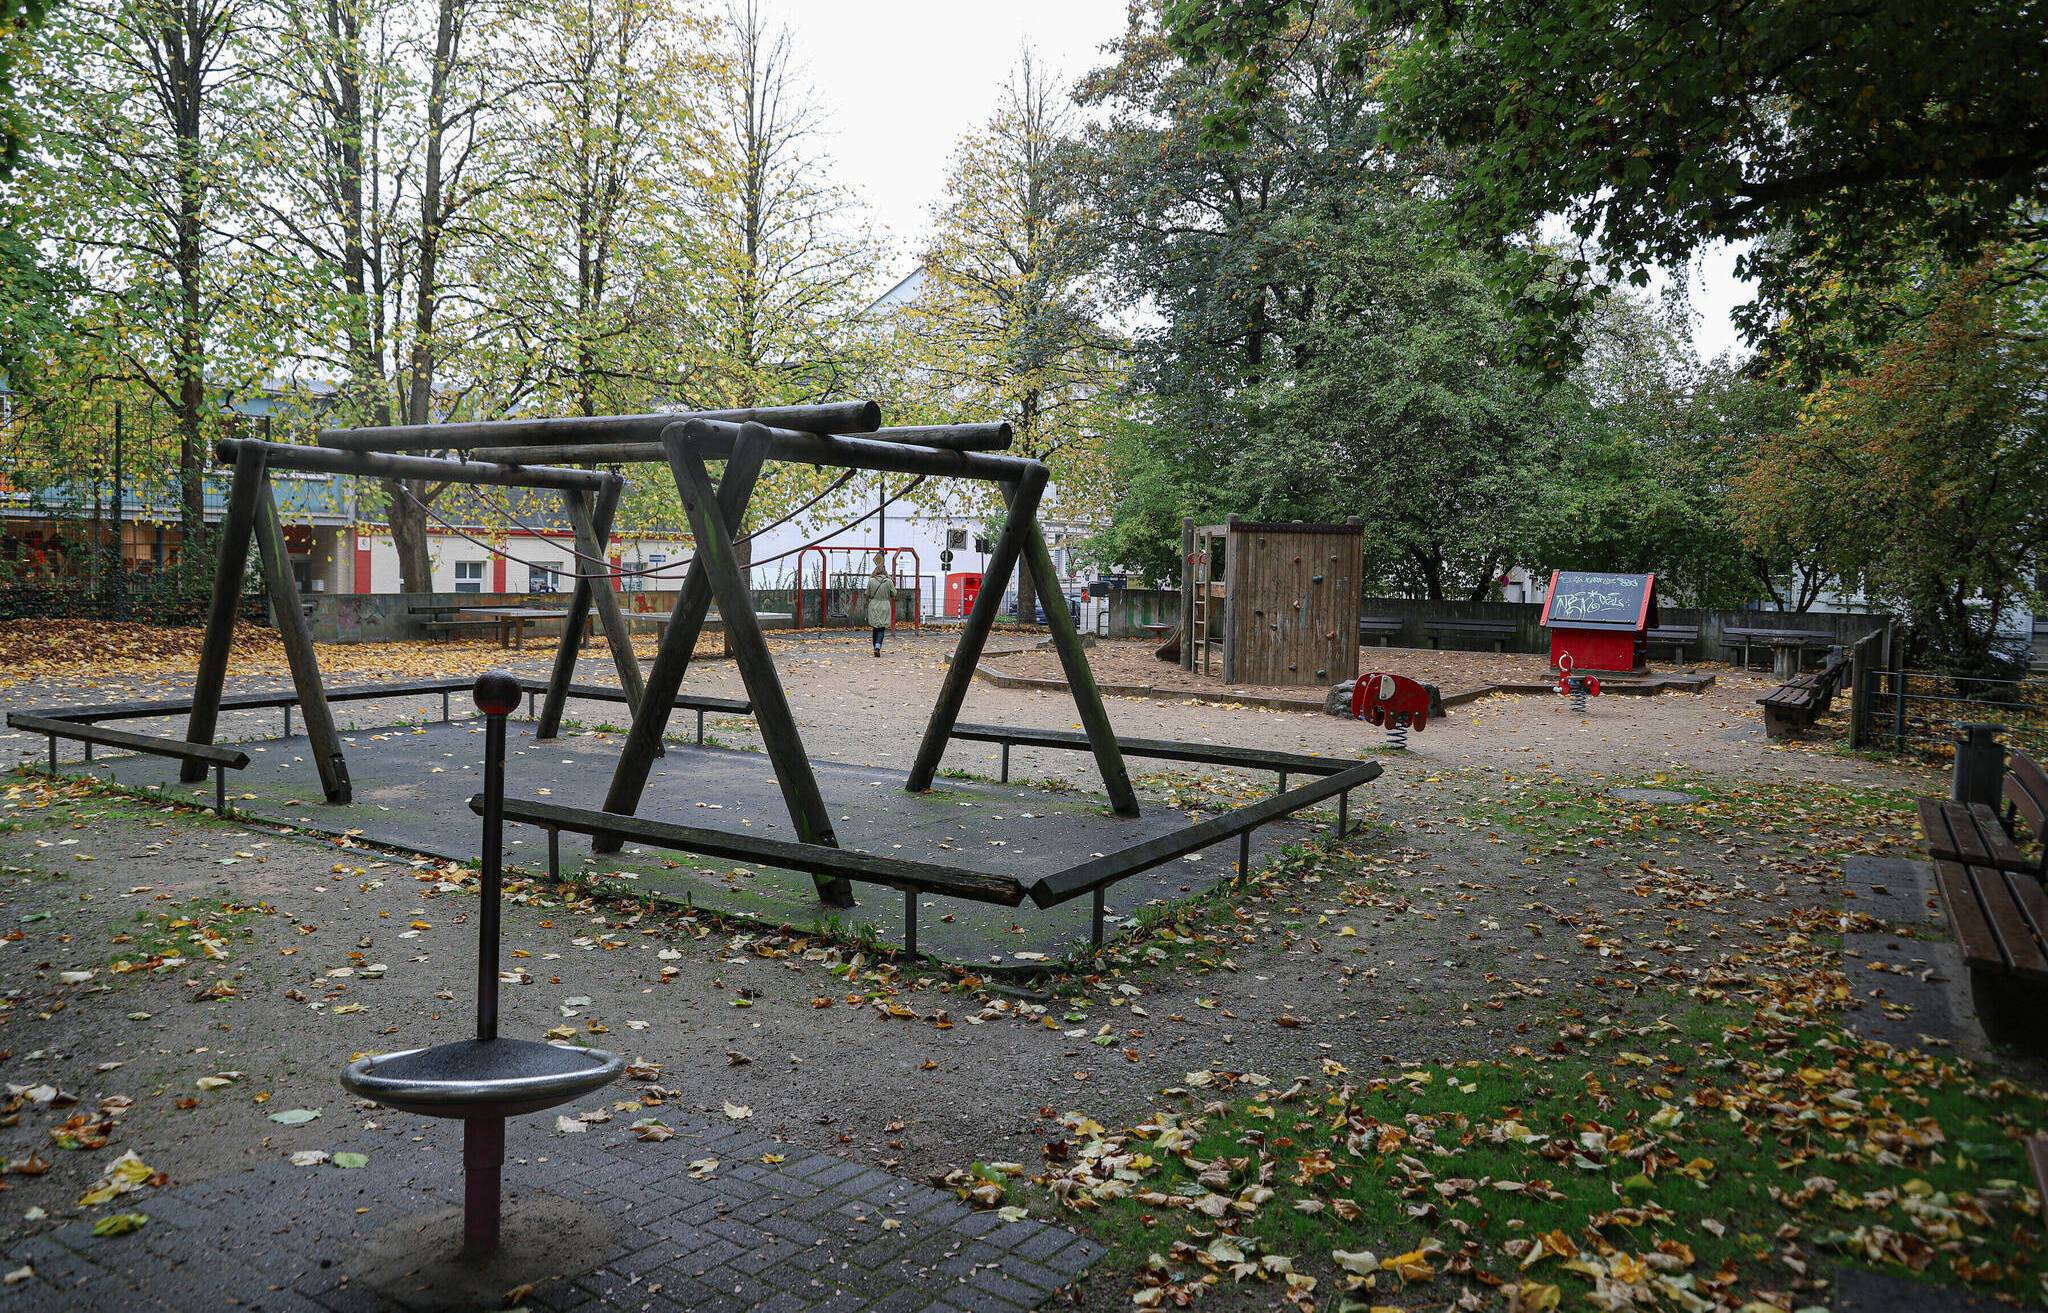  Der Kinderspielplatz Völklinger Platz. 